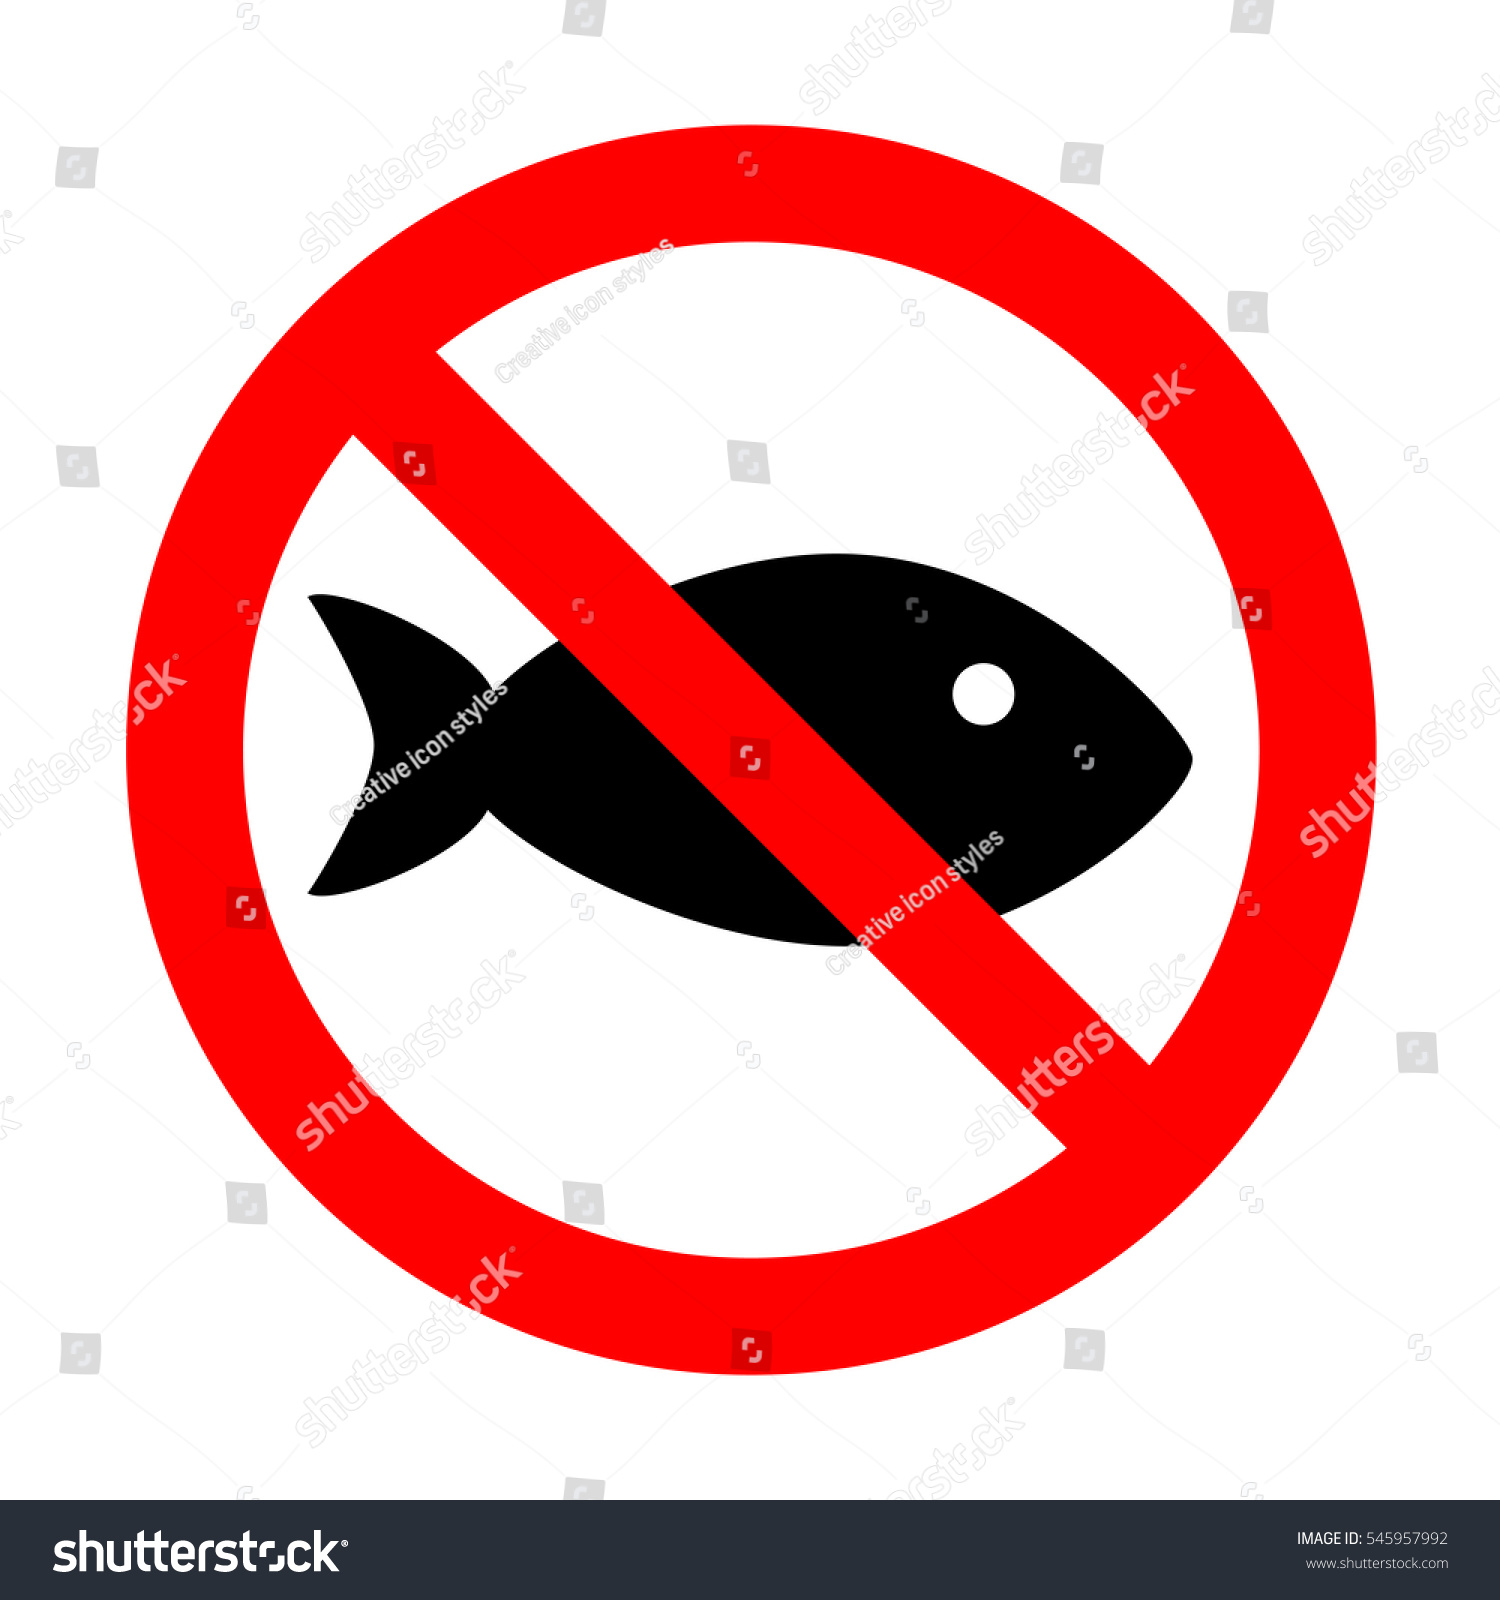 Download No Fish Sign Illustration Stock Vector 545957992 - Shutterstock